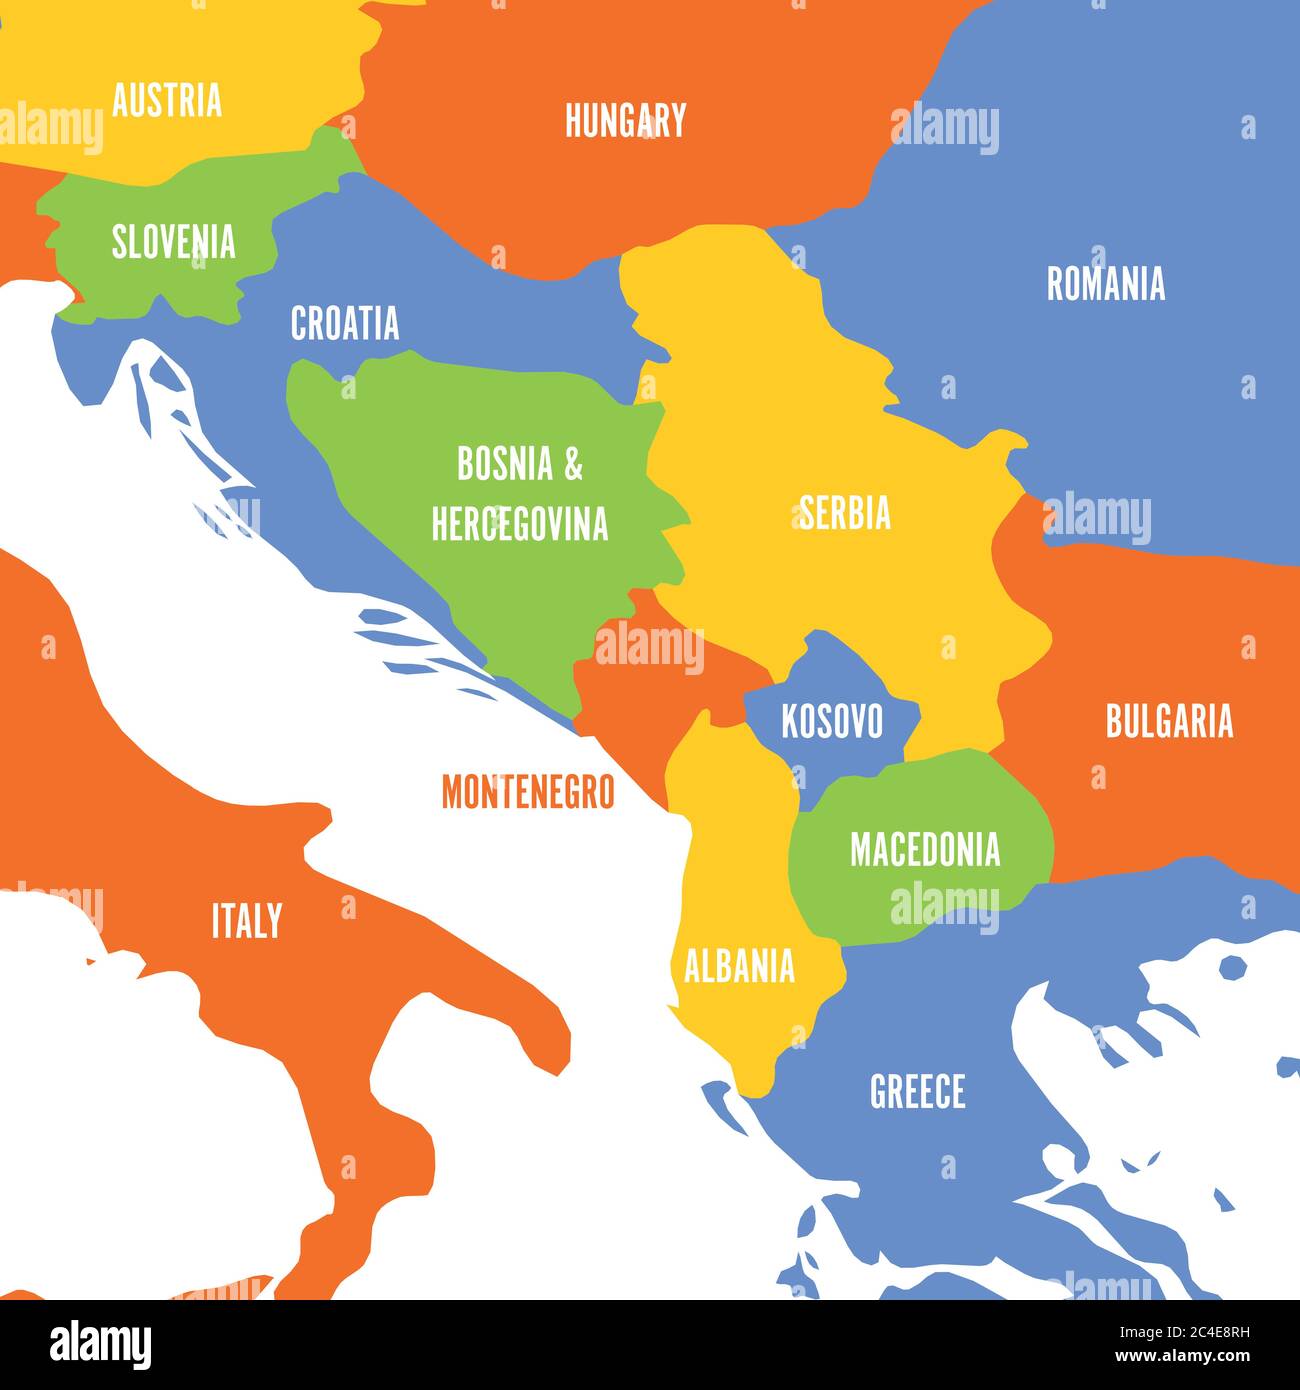 Politische Landkarte des Balkans - Staaten der Balkanhalbinsel. Farbenfrohe Vektorgrafik. Stock Vektor